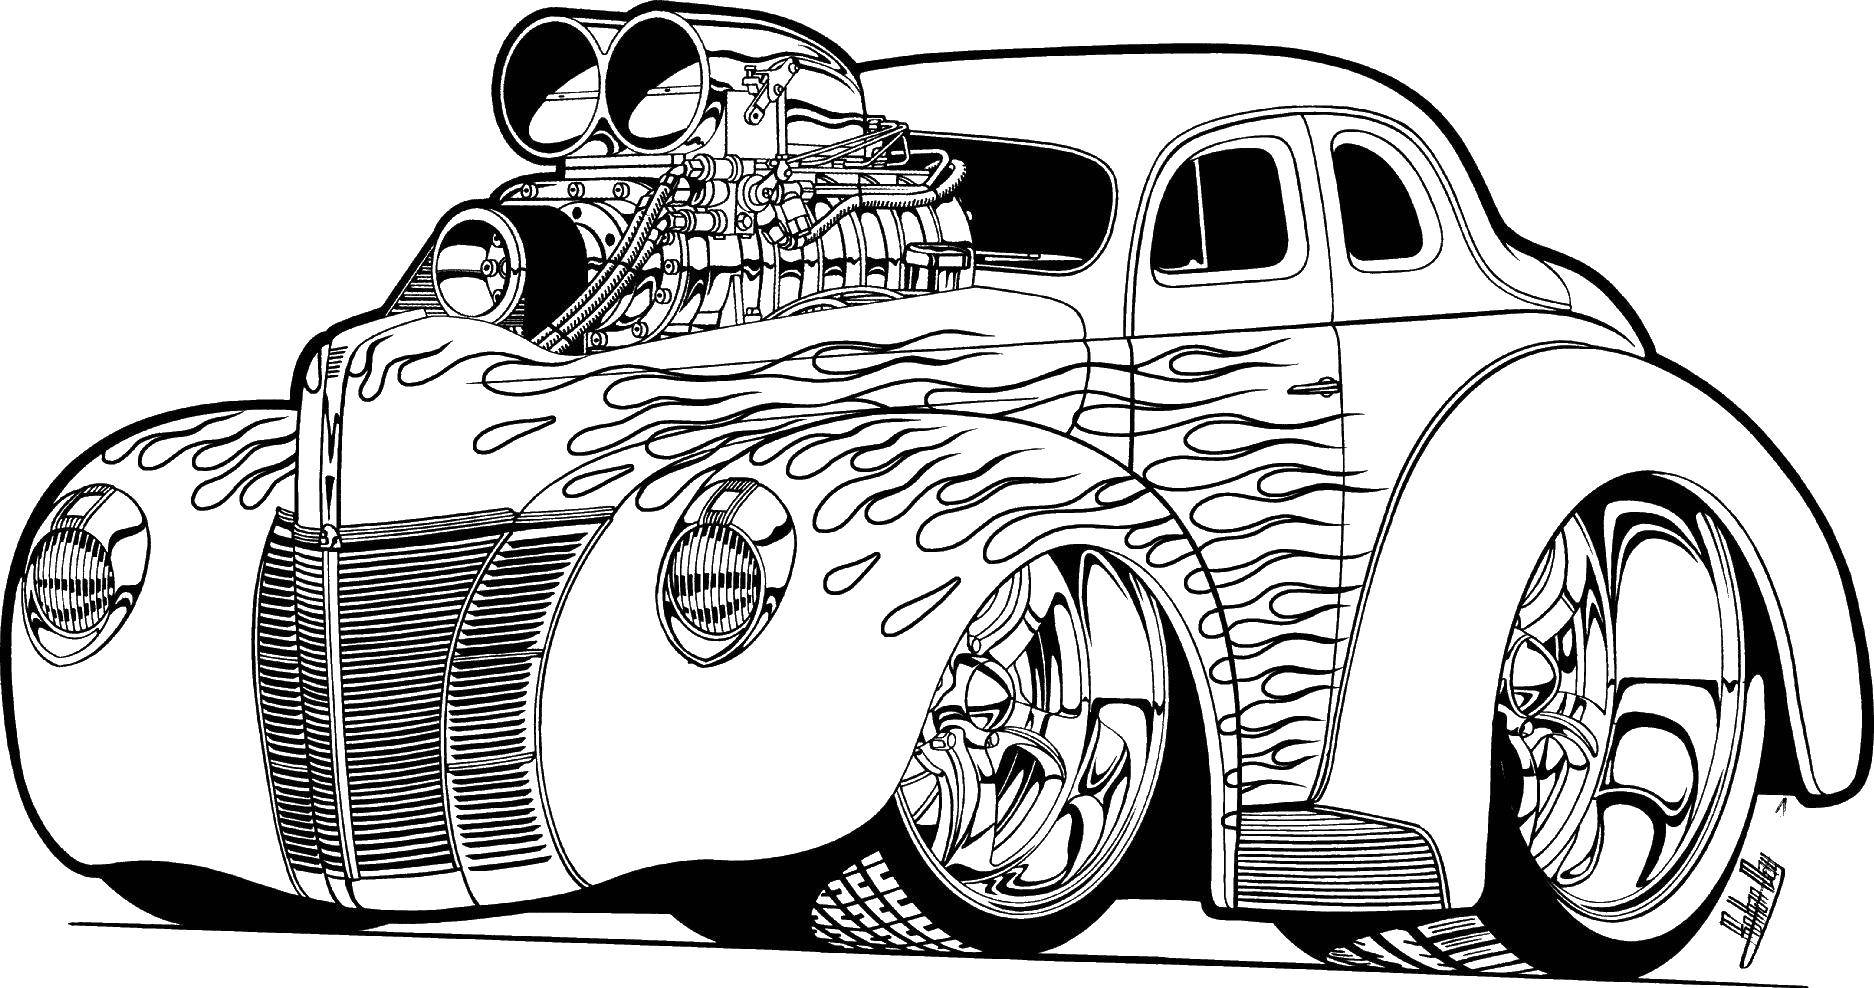 Название: Раскраска Машина с огненным рисунком. Категория: транспорт. Теги: Транспорт, машина.